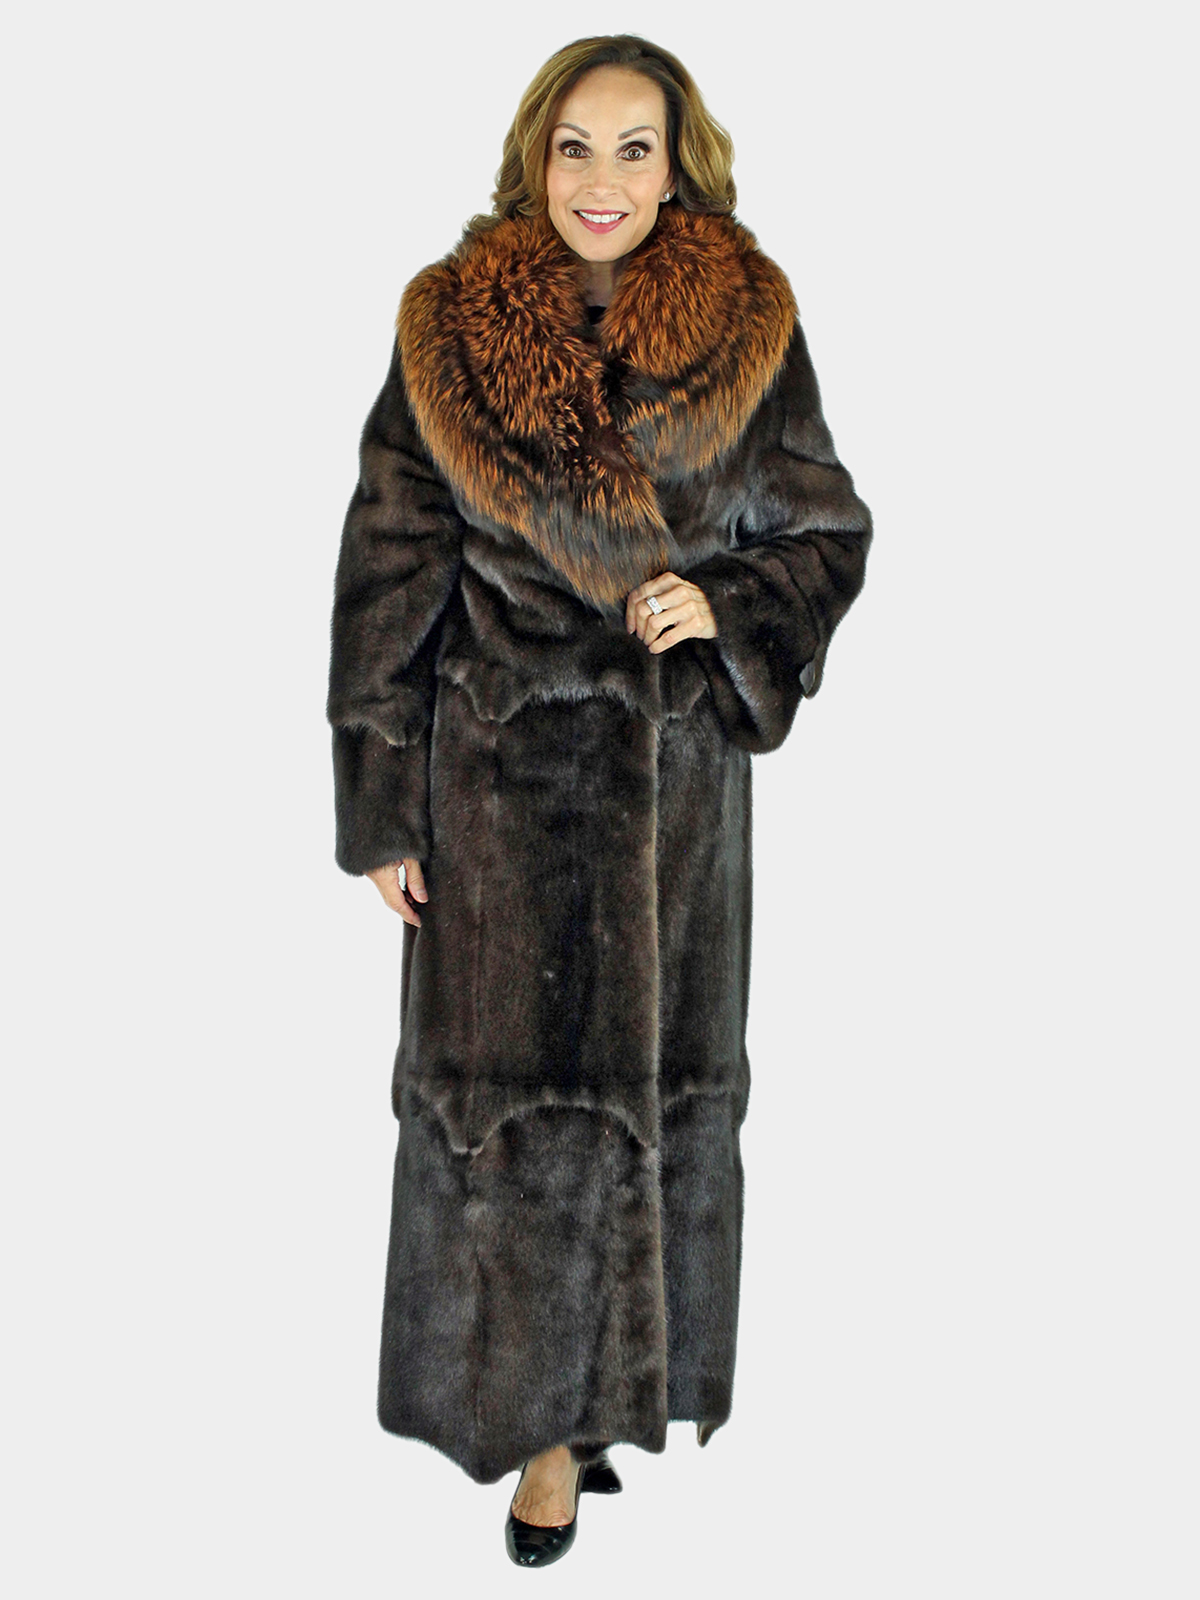 Brown Cross Mink Fur Coat (Women's Medium) - Estate Furs